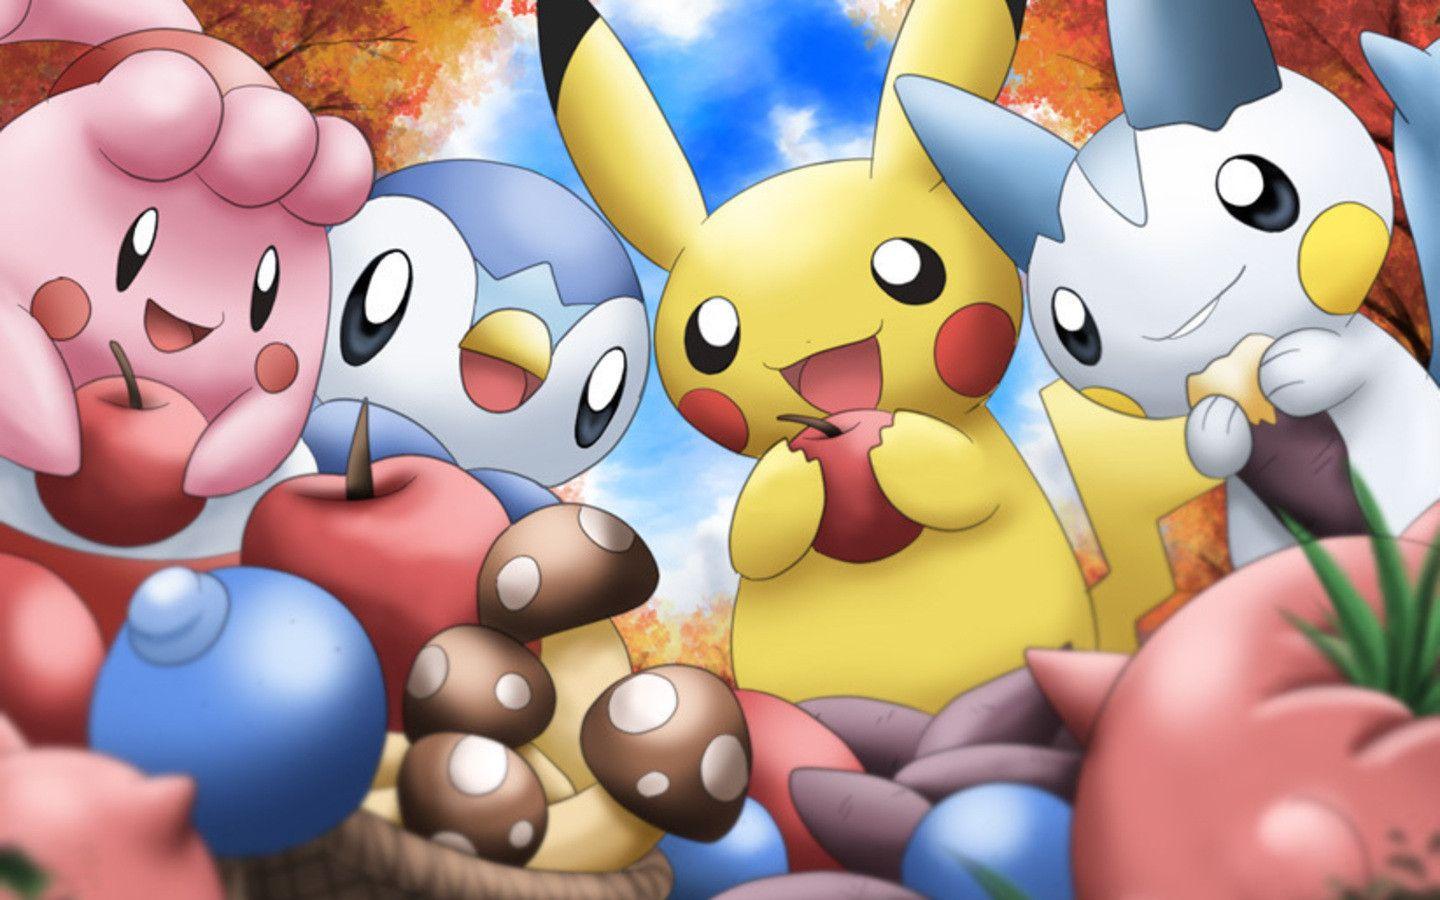 Download Cute Pokemon Free Wallpaper 1440x900. Full HD Wallpaper